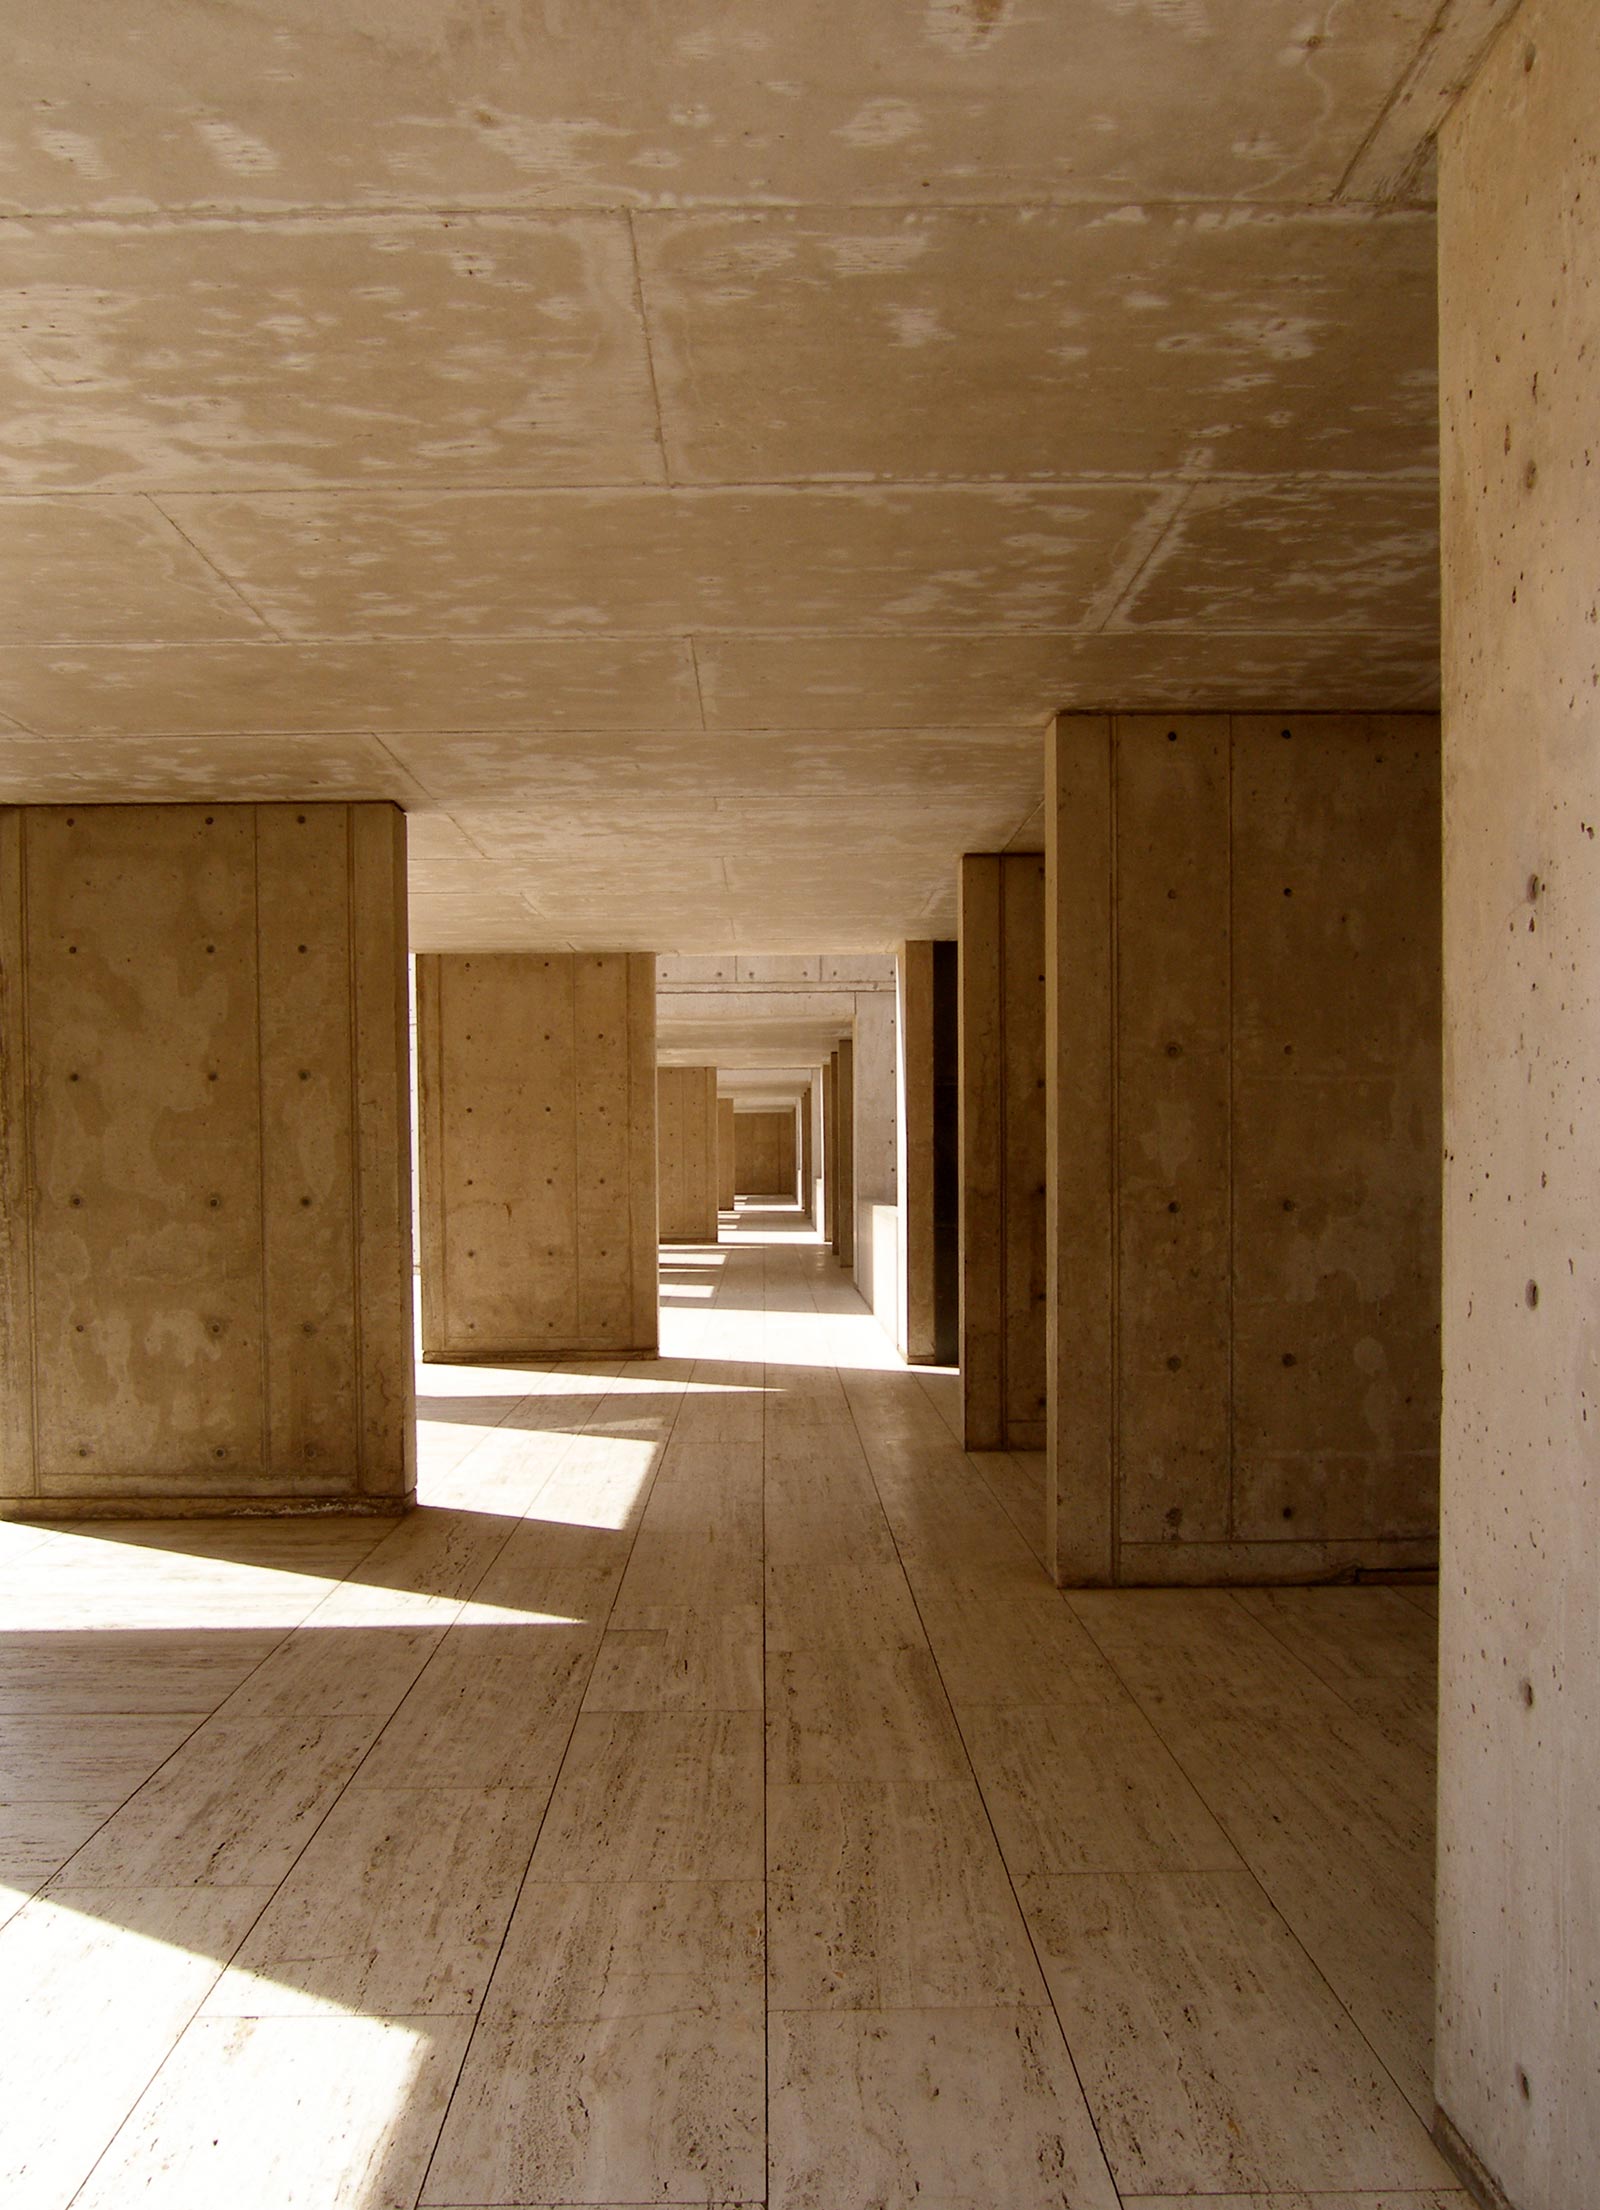 Louis Kahn, Xavier de Jauréguiberry · Salk Institute for